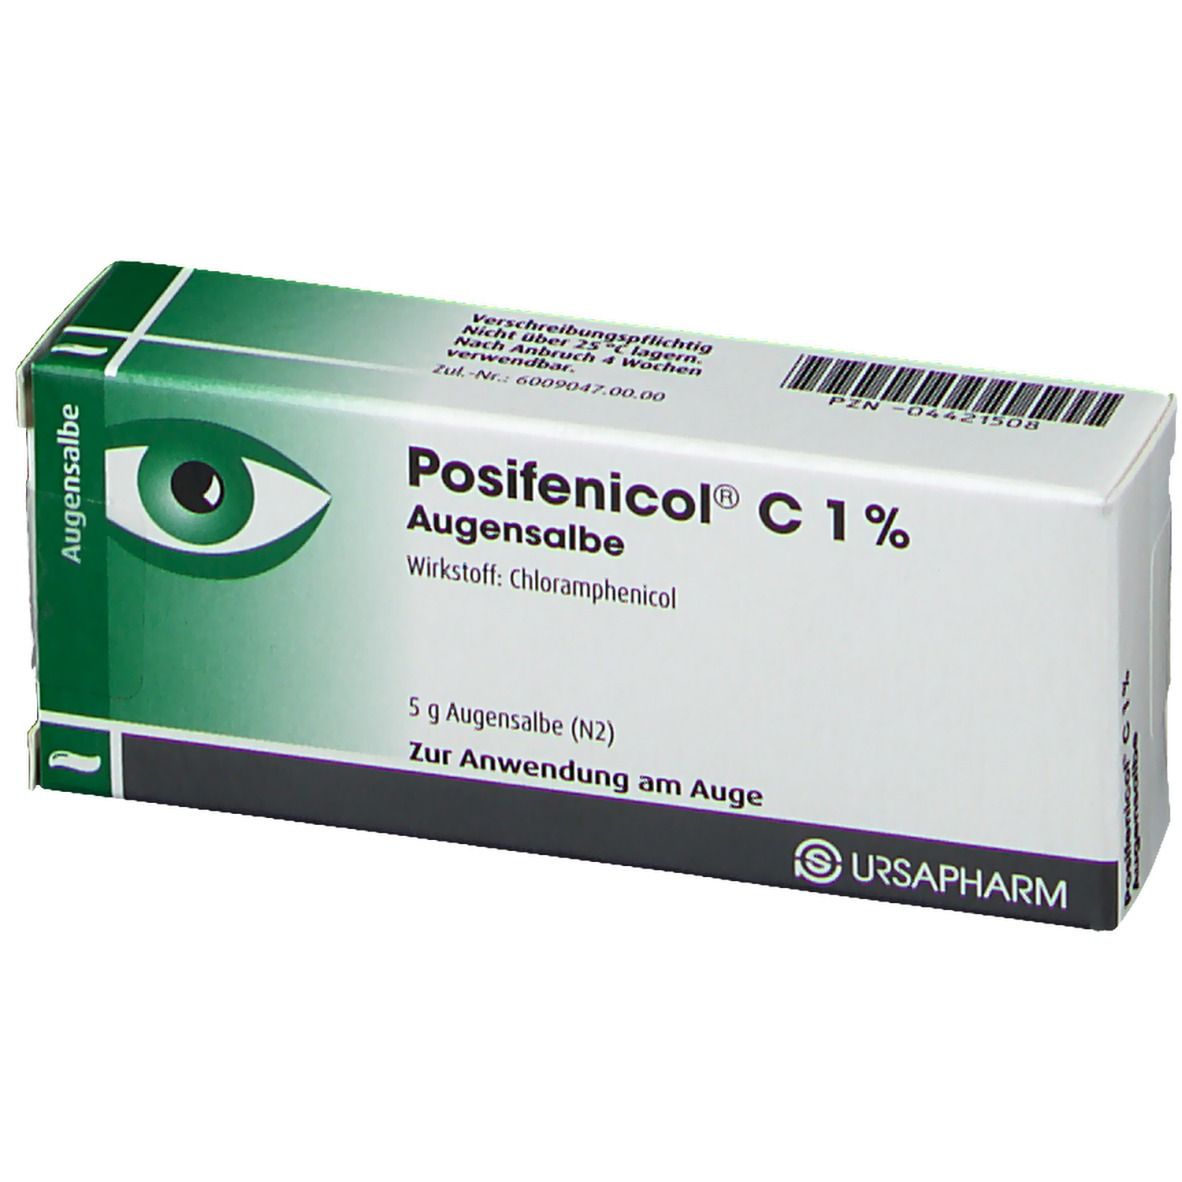 Posifenicol® C 1% Augensalbe